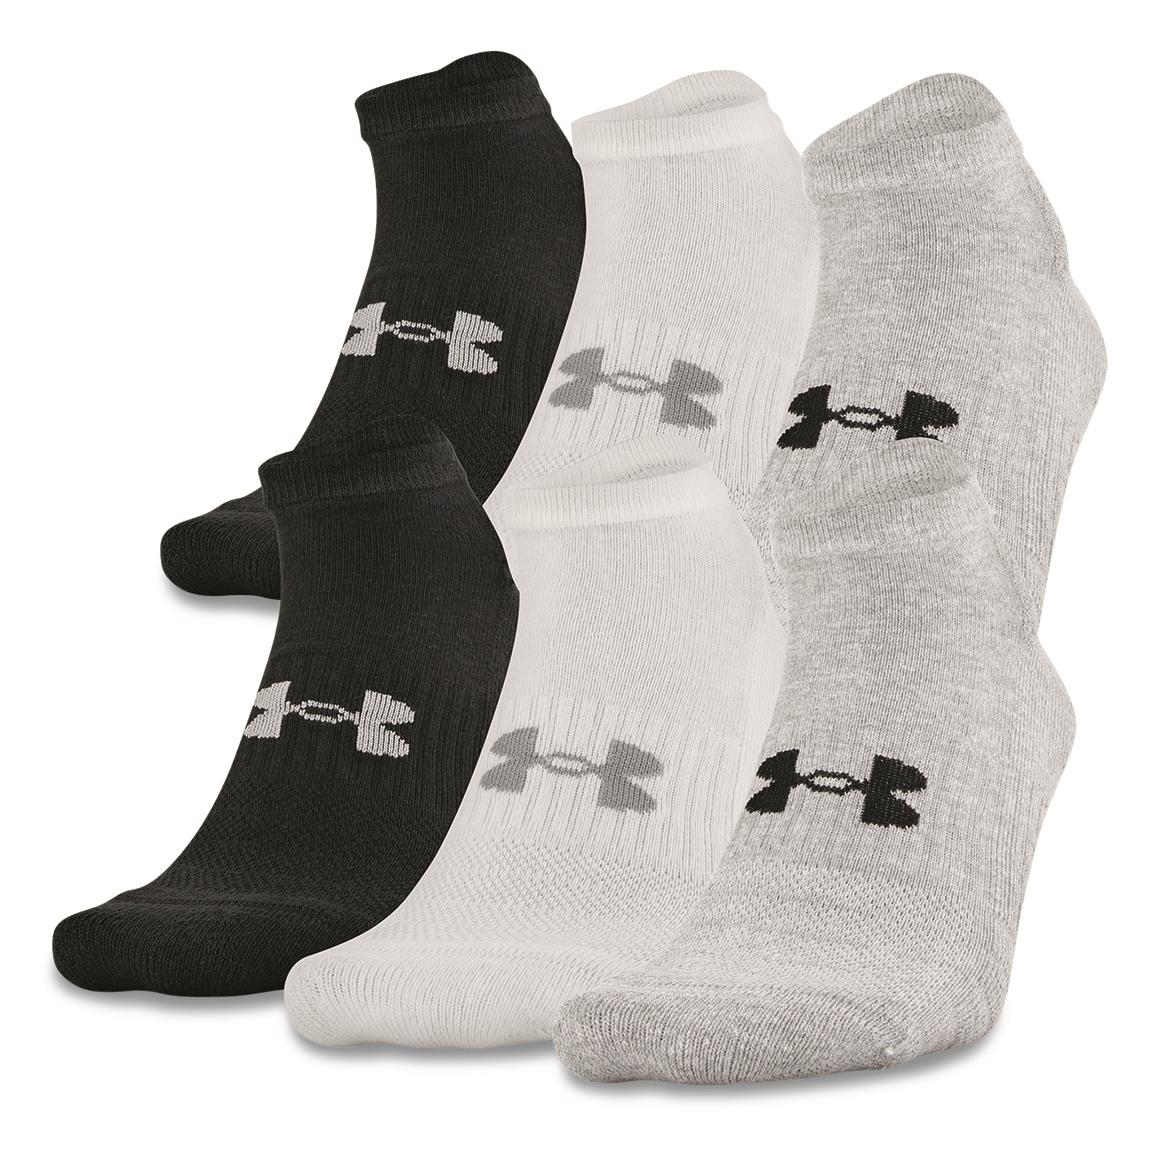 Under Armour Men's Training Cotton No-show Socks, 6 Pairs, Steel/White/Black